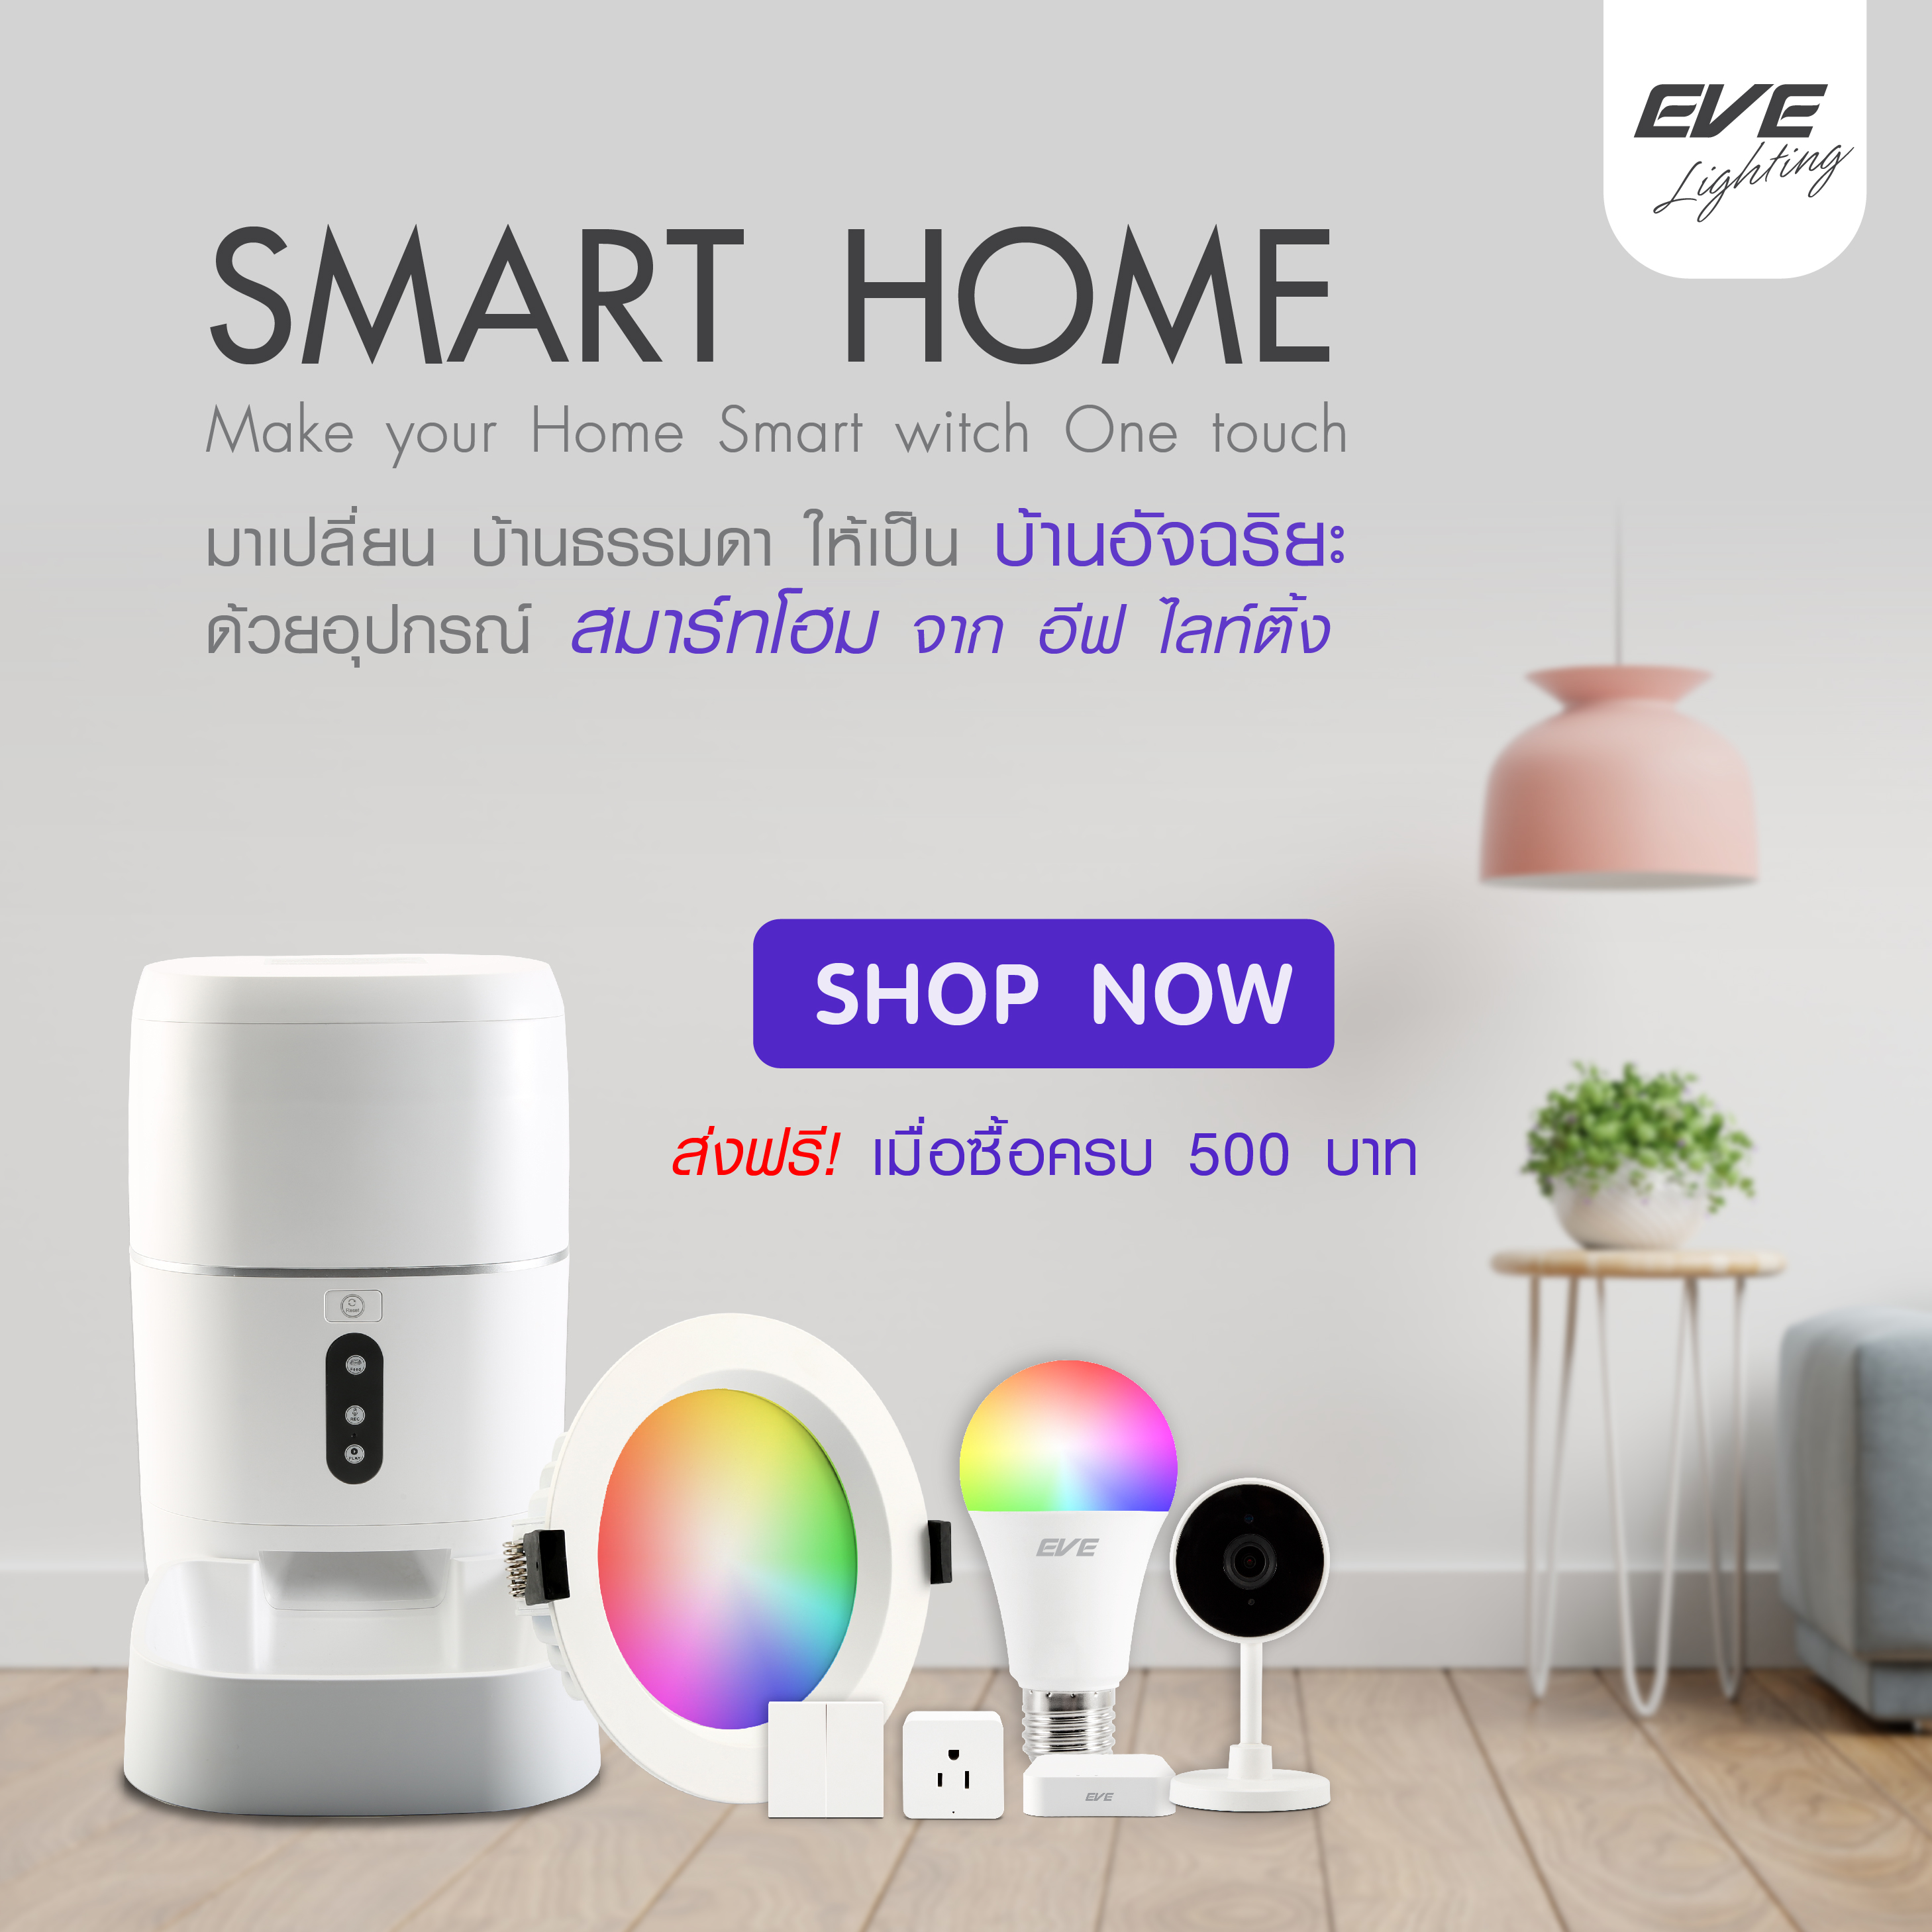 Smart Home ของ EVE lighting